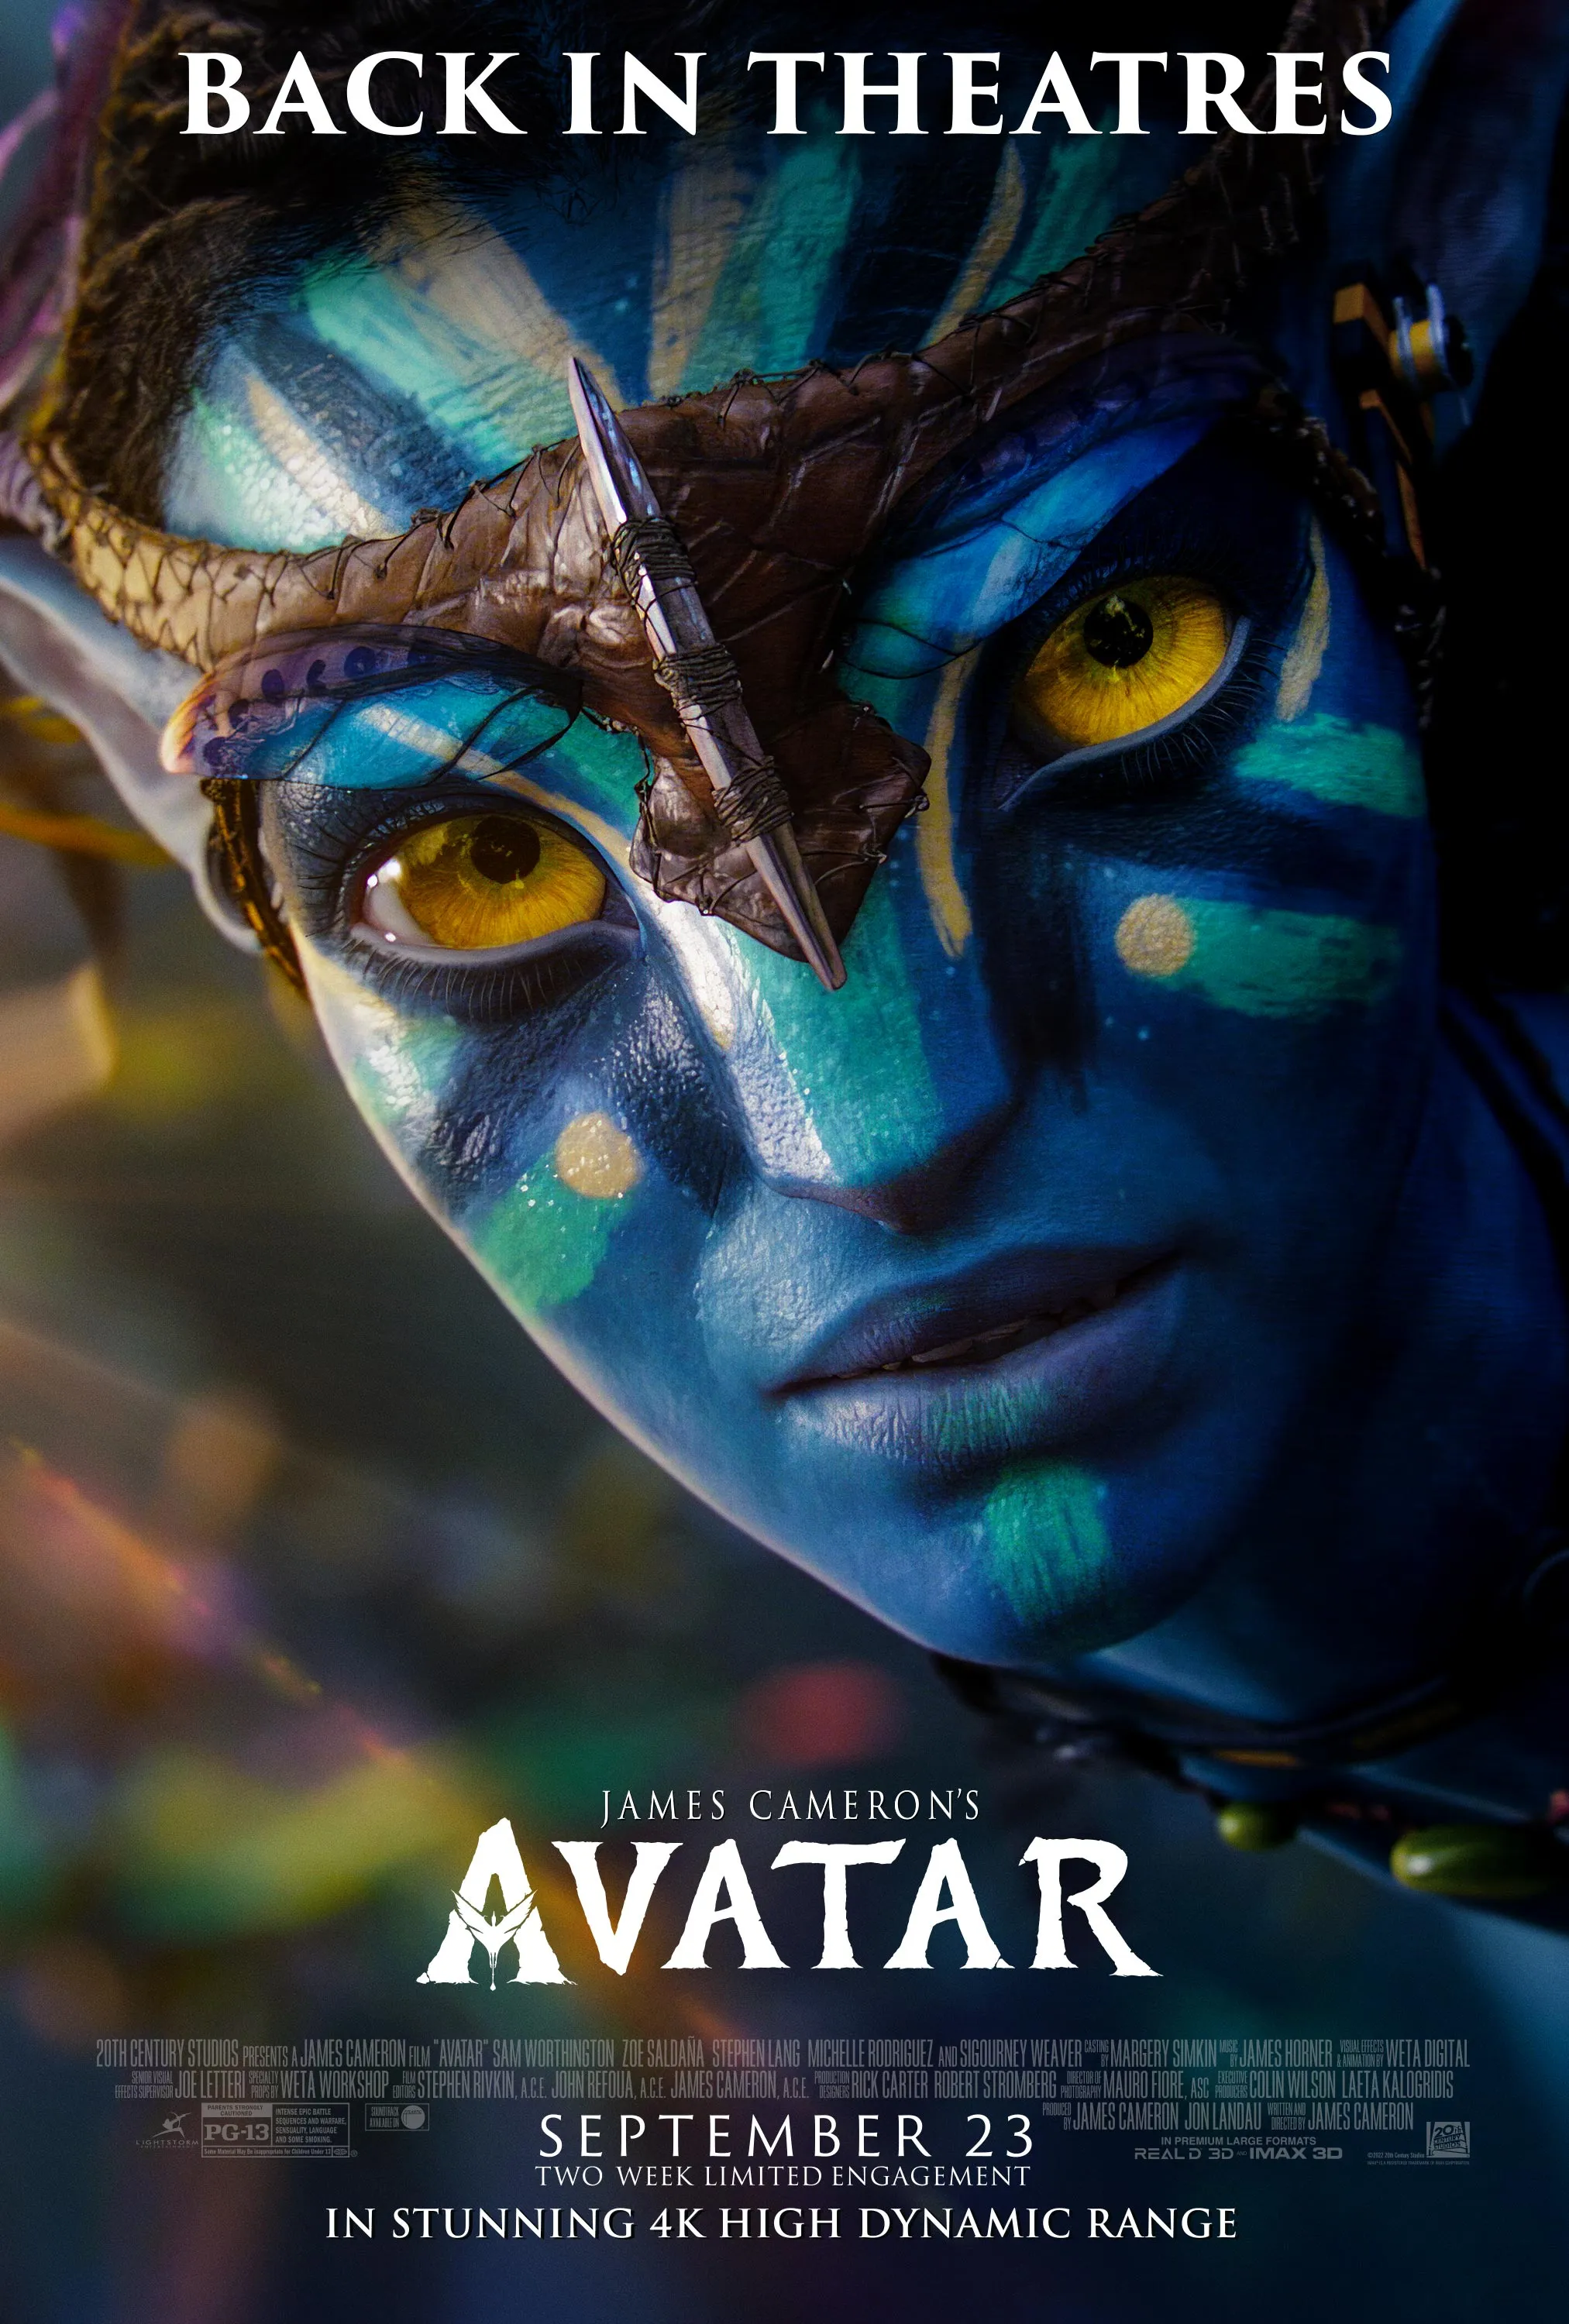 Avatar / Аватар (2009)